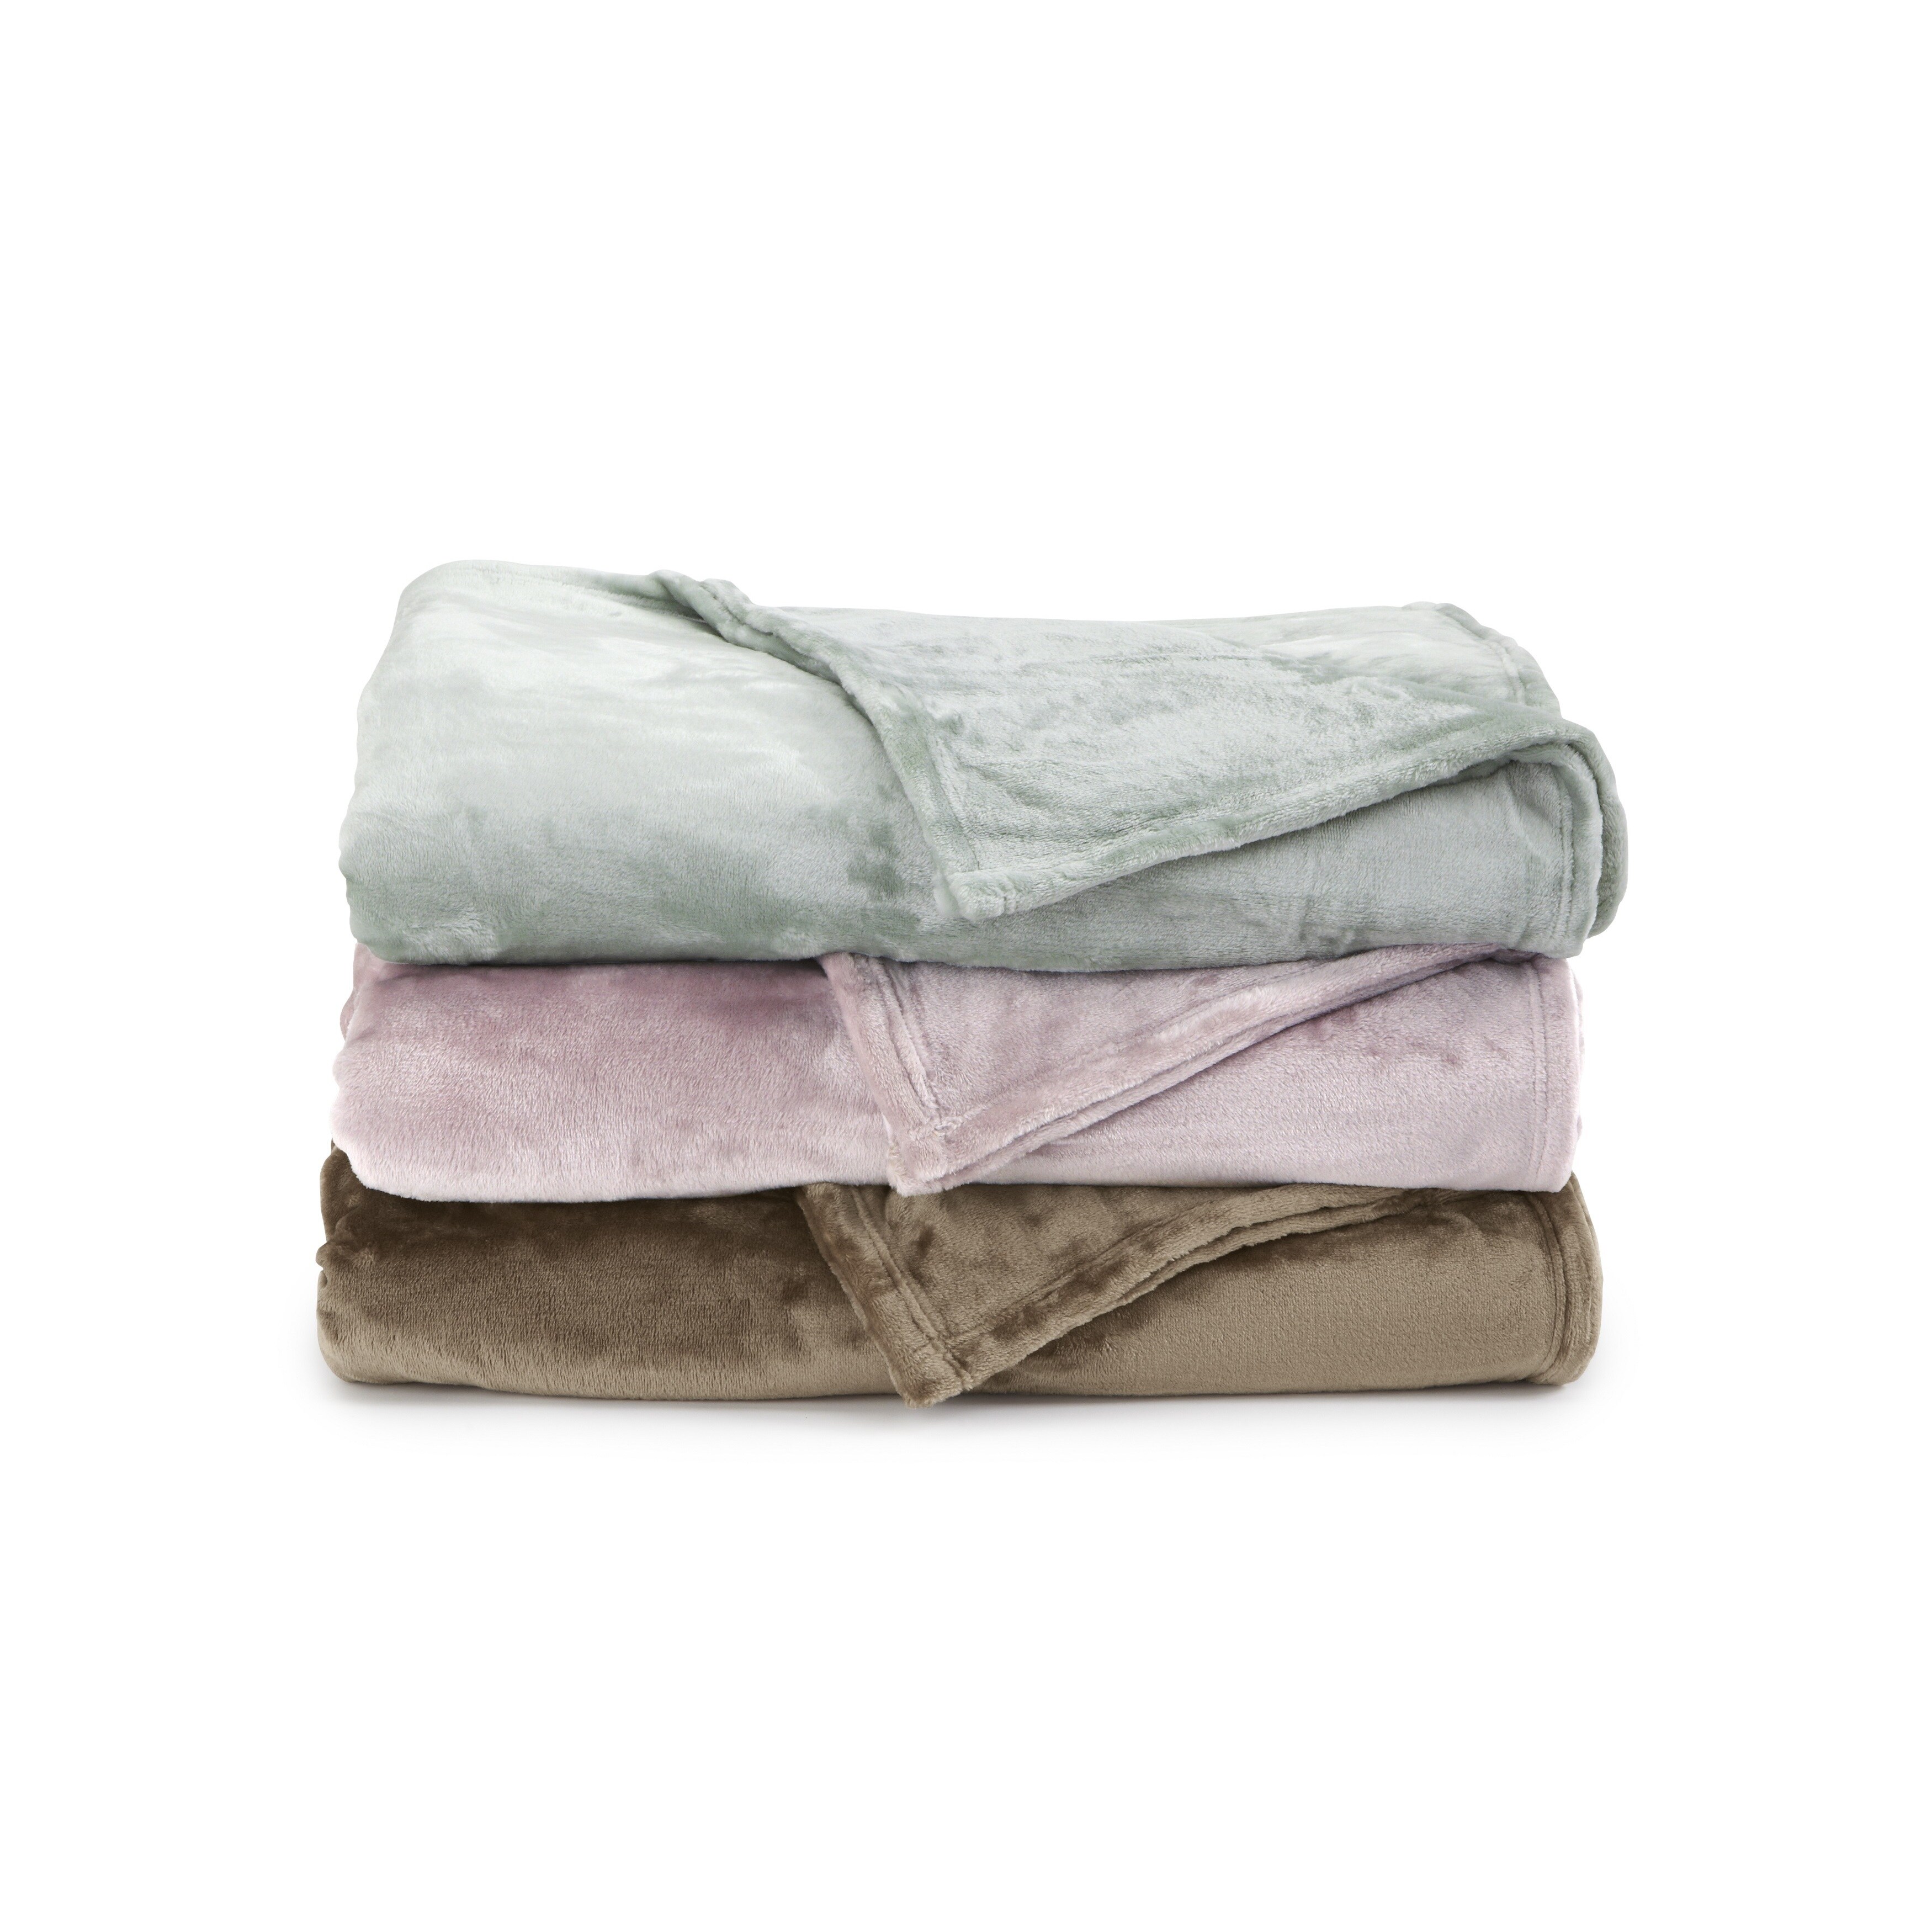 Best Soft Heavy Blanket Purple Woven Sensory 102 x 90 Inch Thick Plush